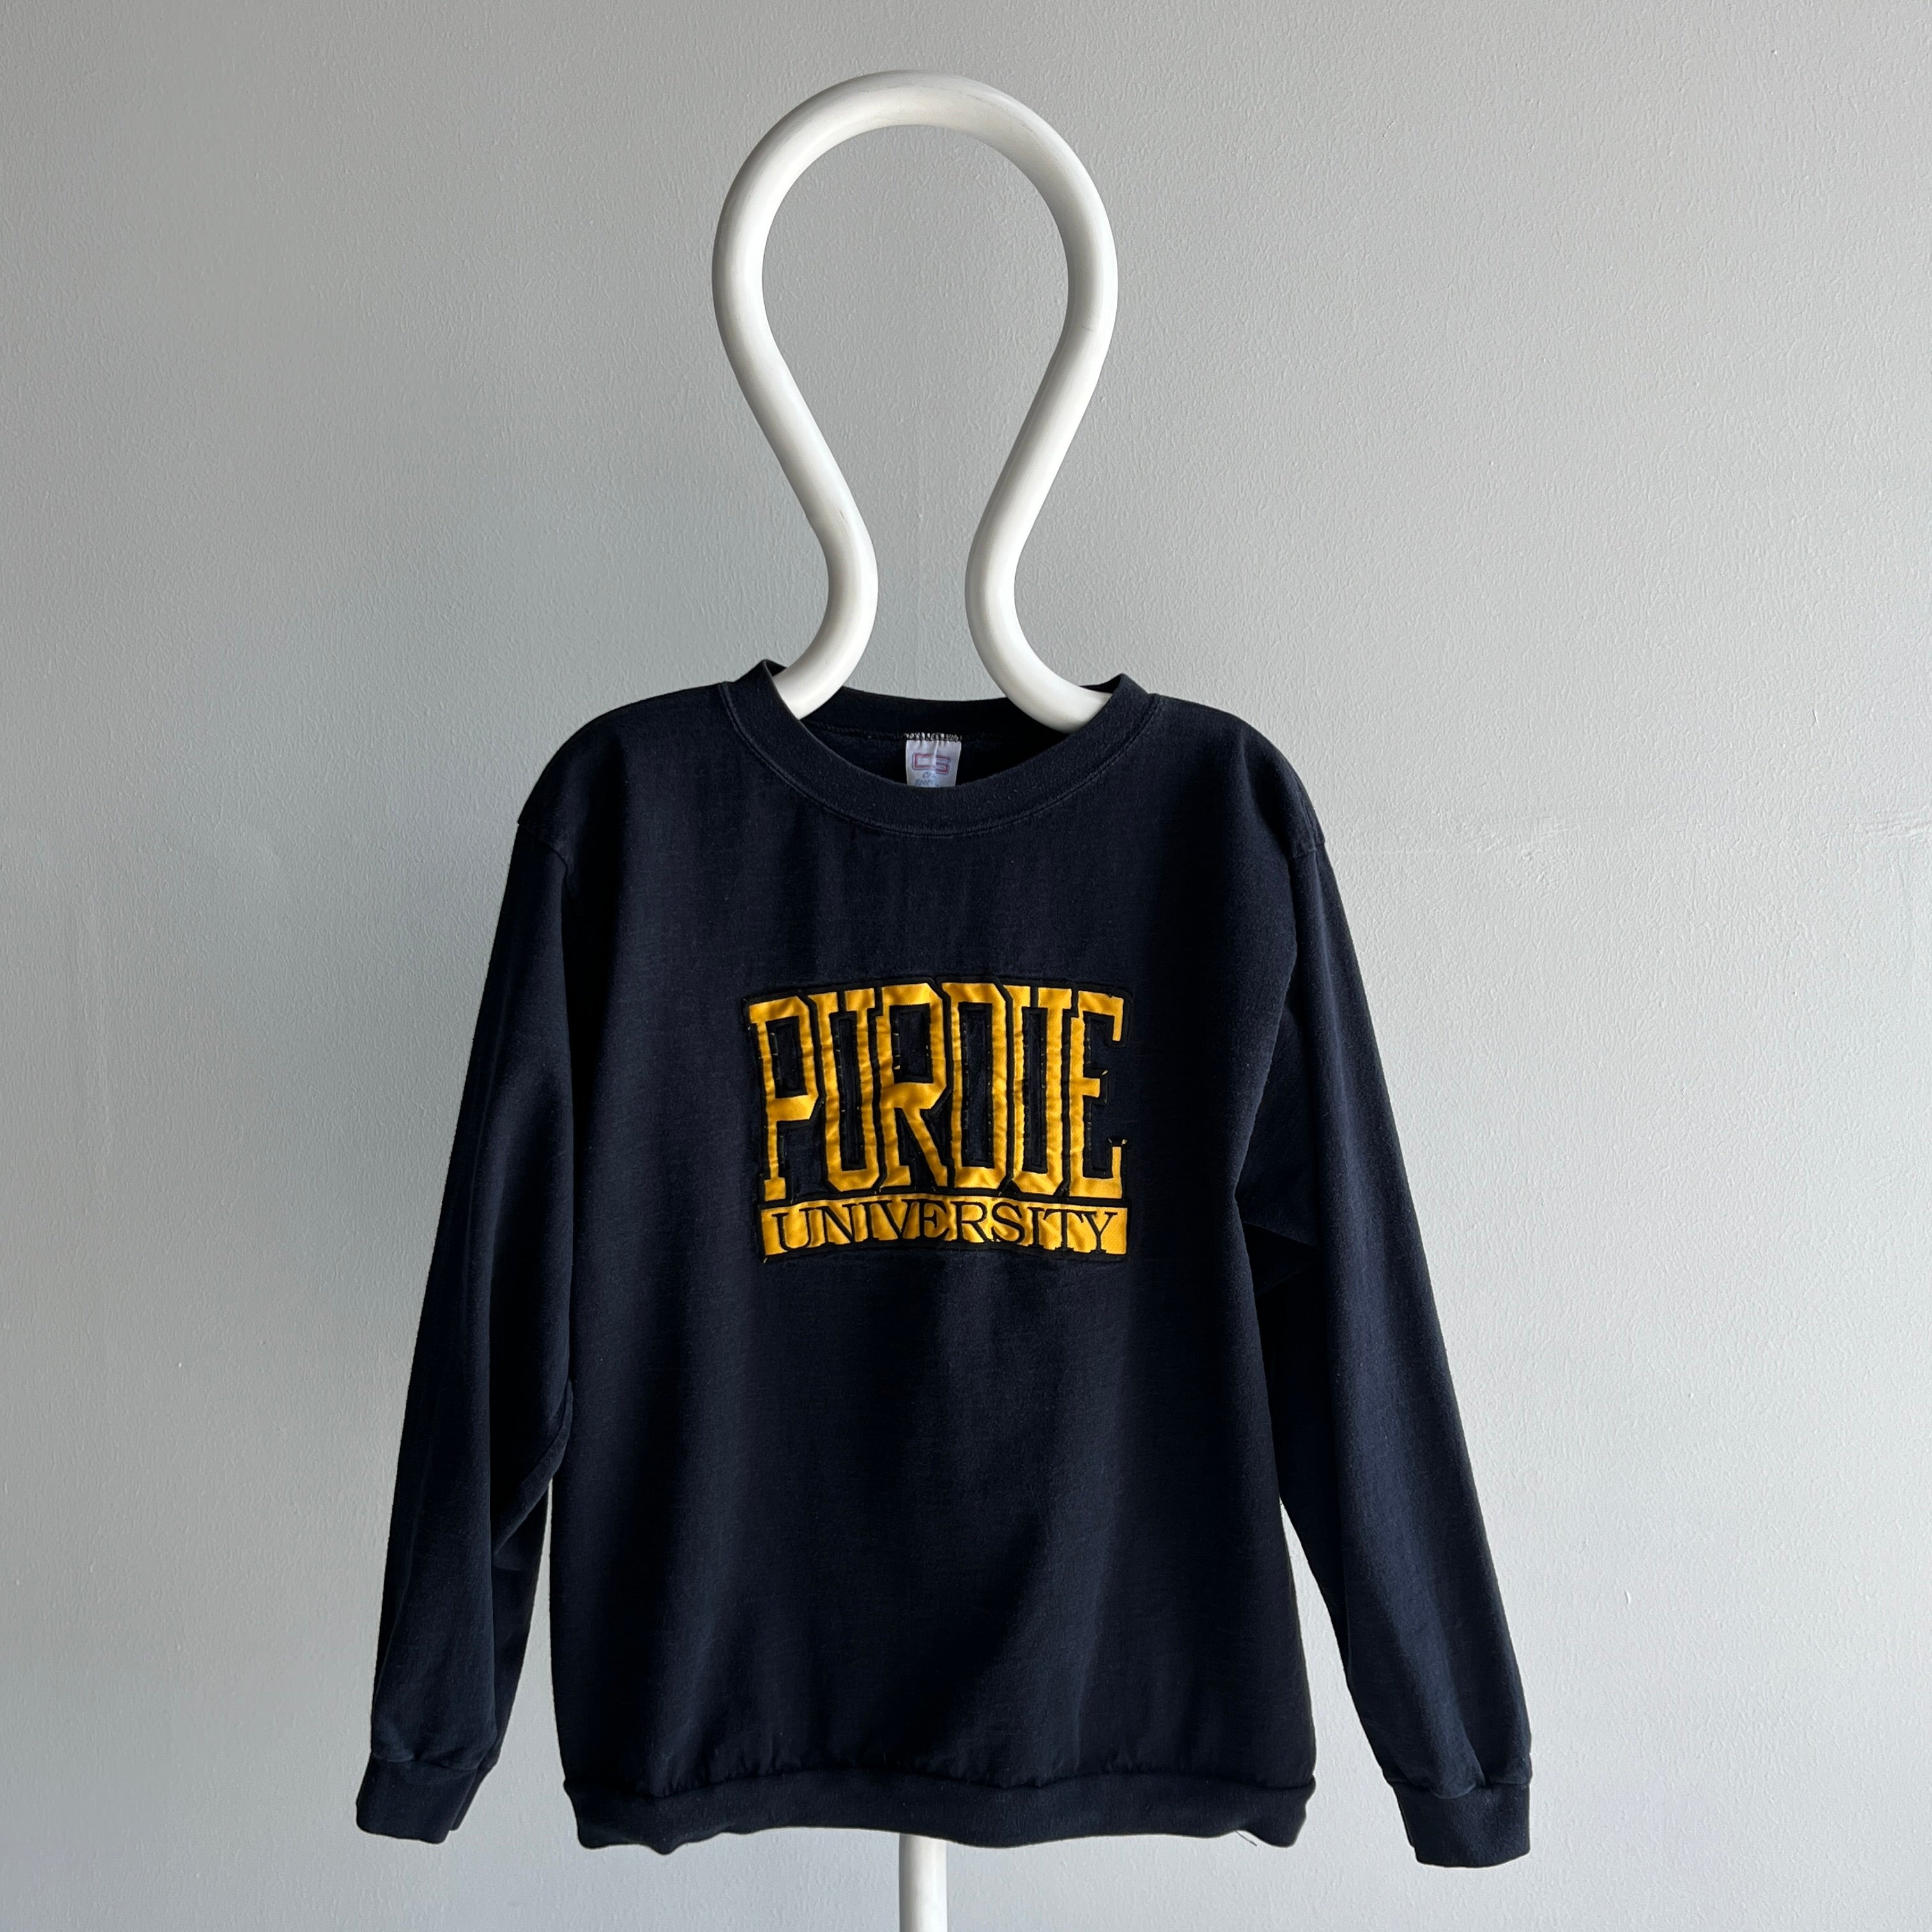 1980/90s Purdue Long Sleeve Shirt/Sweatshirt